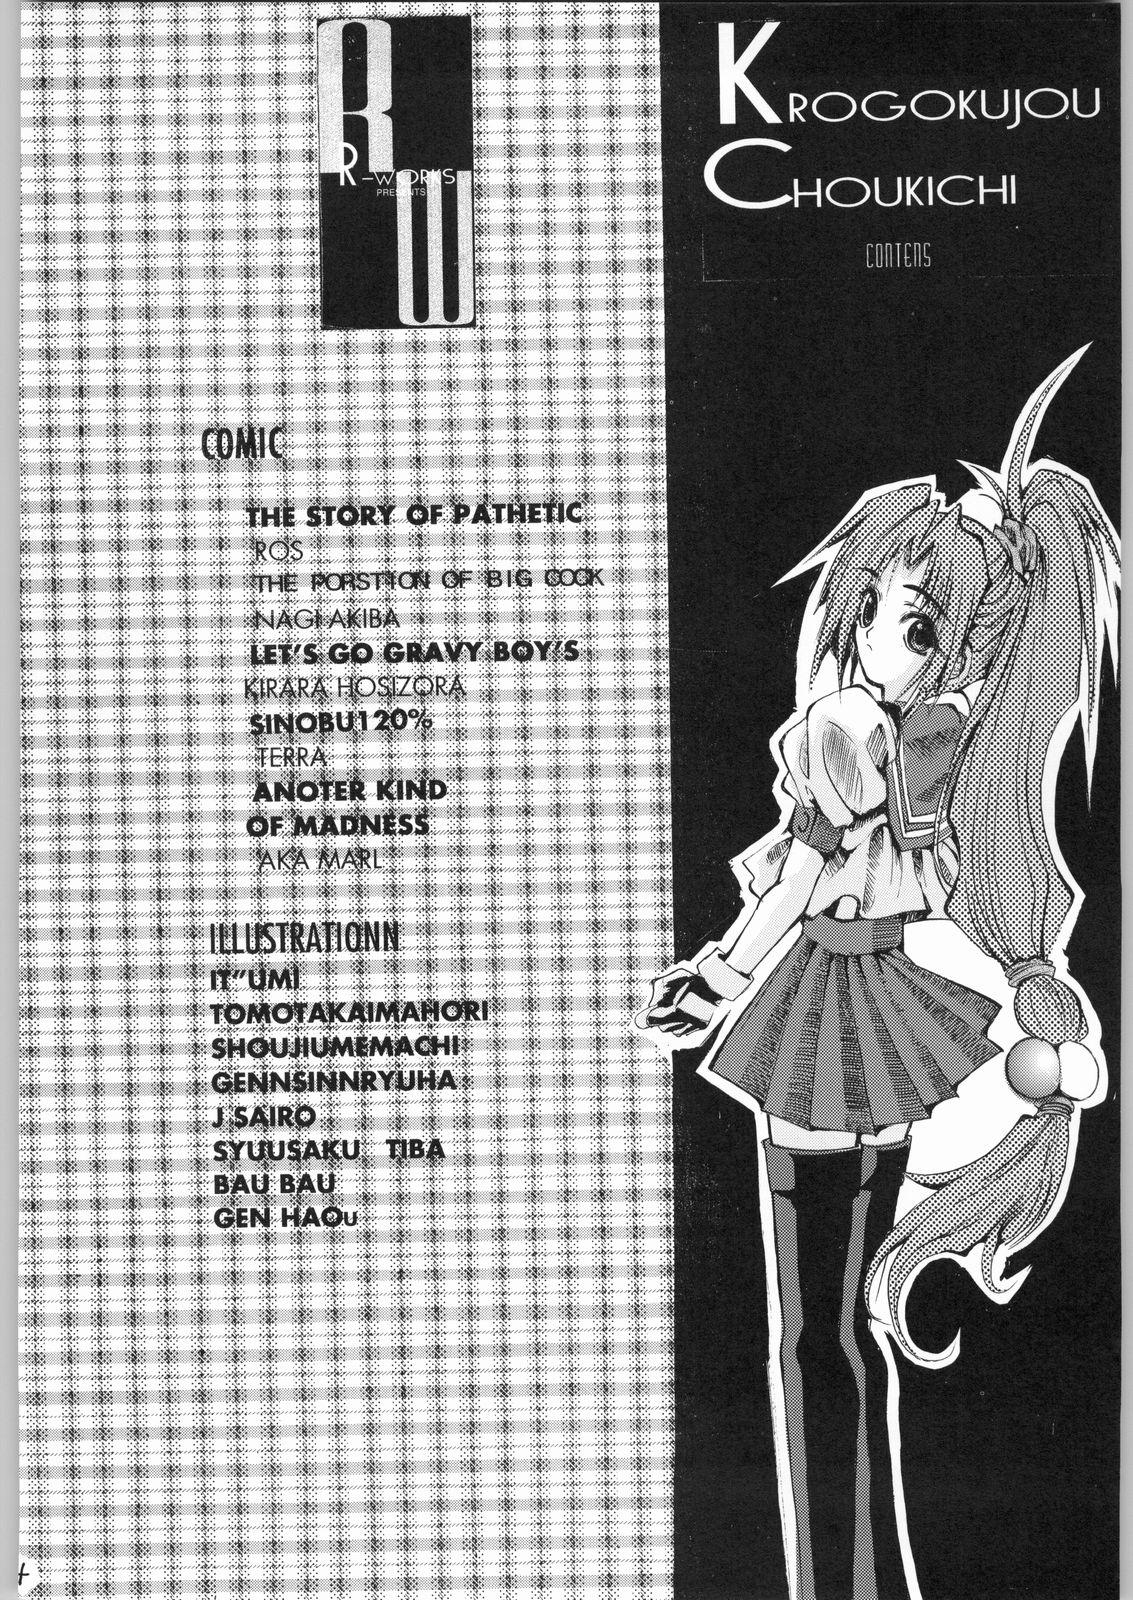 Collar Kuro Gokujou Choukichi - Asuka 120 Lez Hardcore - Page 3